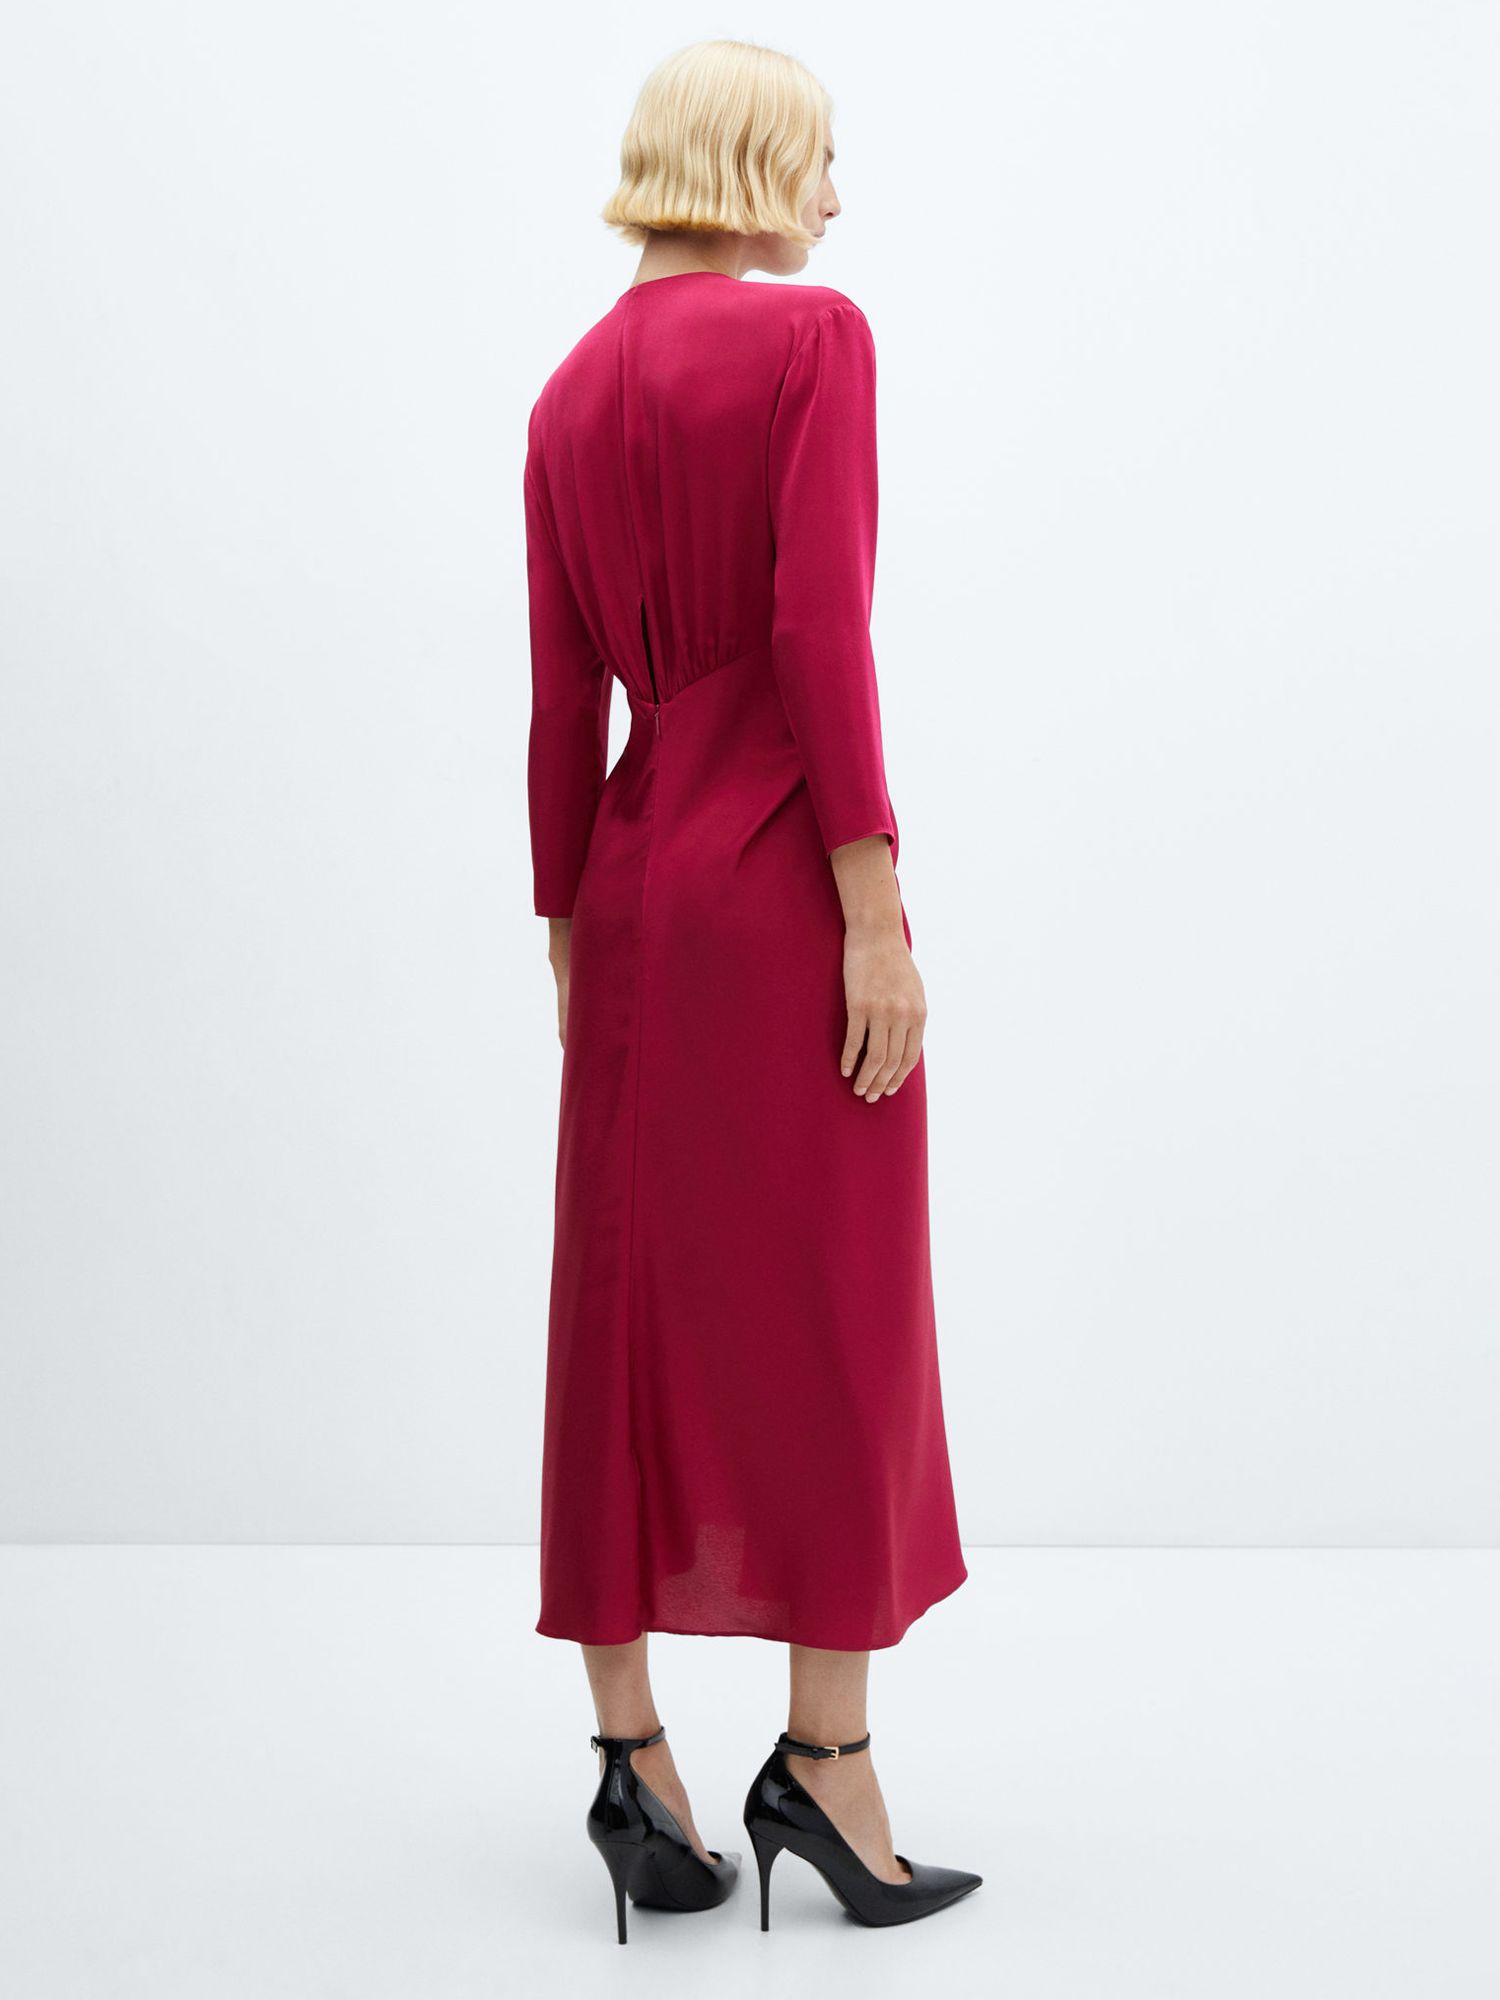 Mango Knot Detail Satin Midi Dress, Bright Pink at John Lewis & Partners